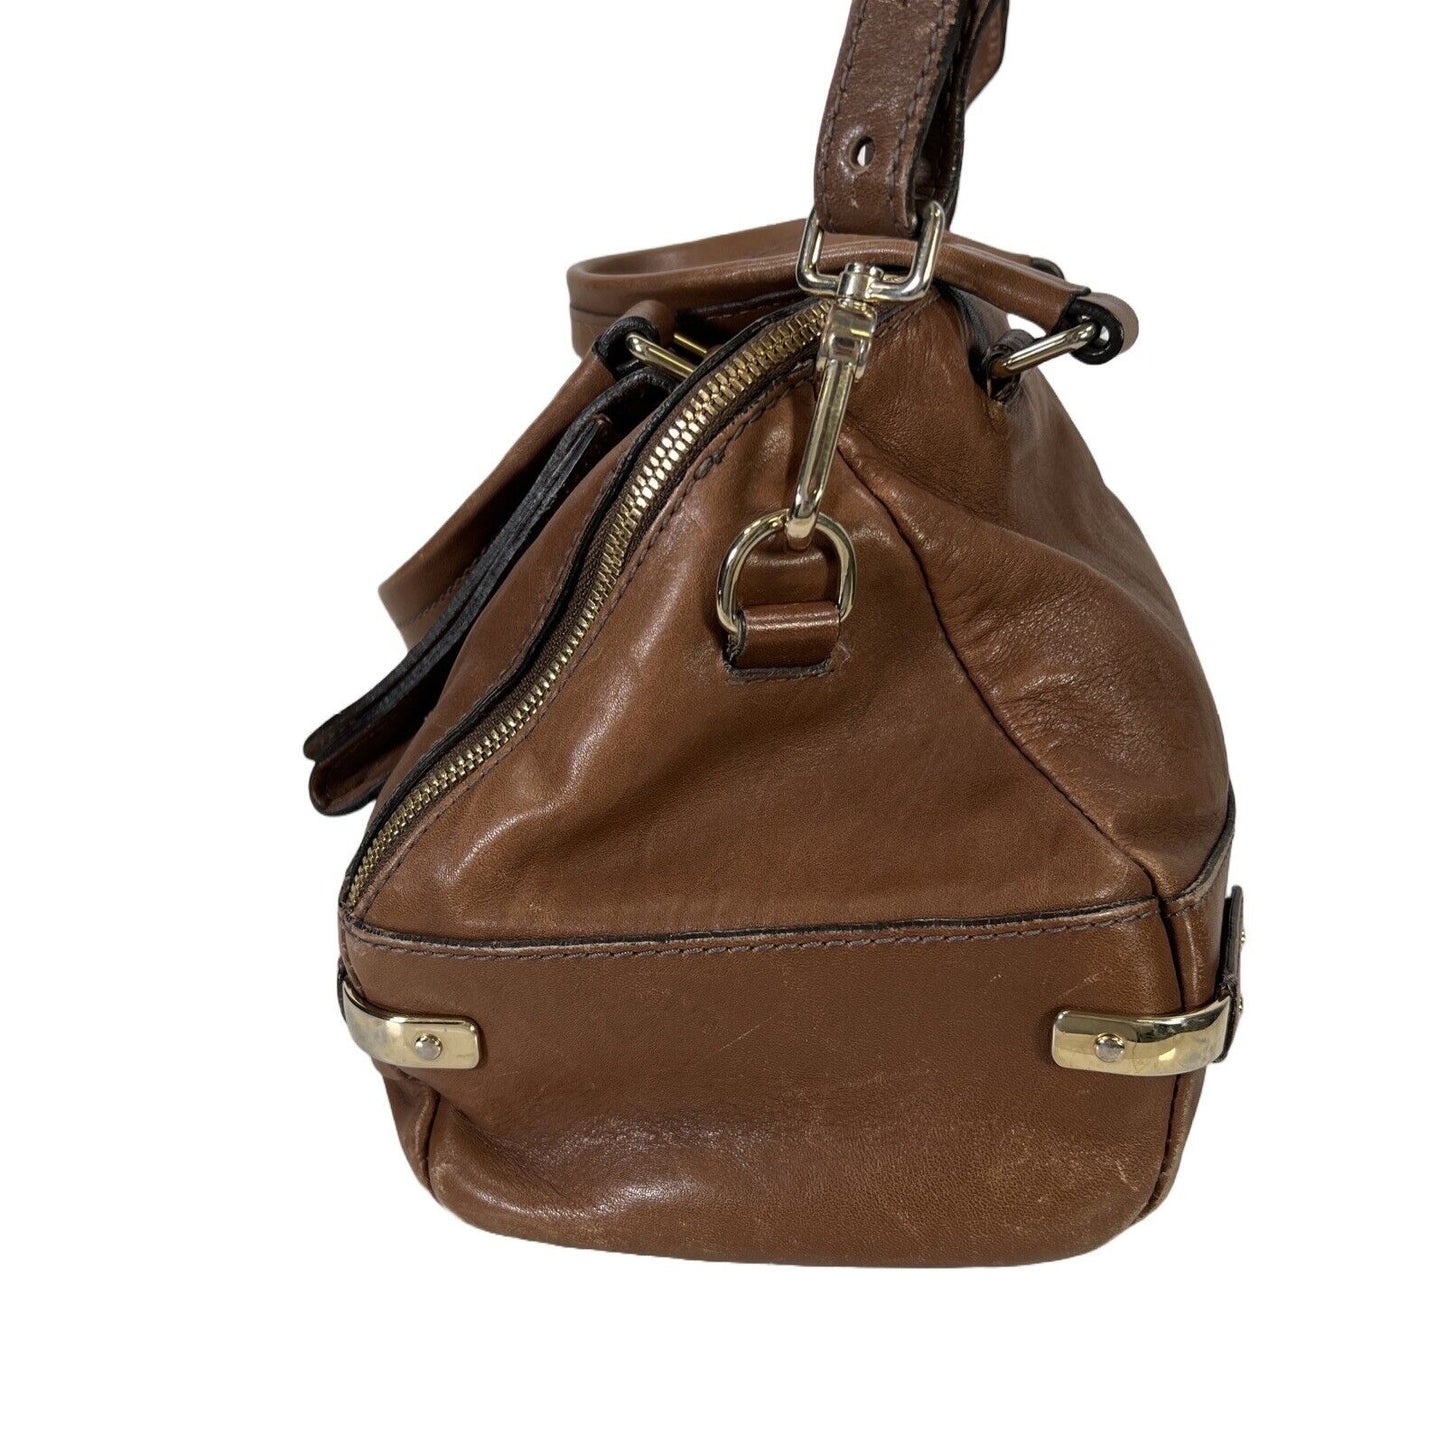 Furla Women's Brown Leather Medium Satchel Shoulder Bag Purse